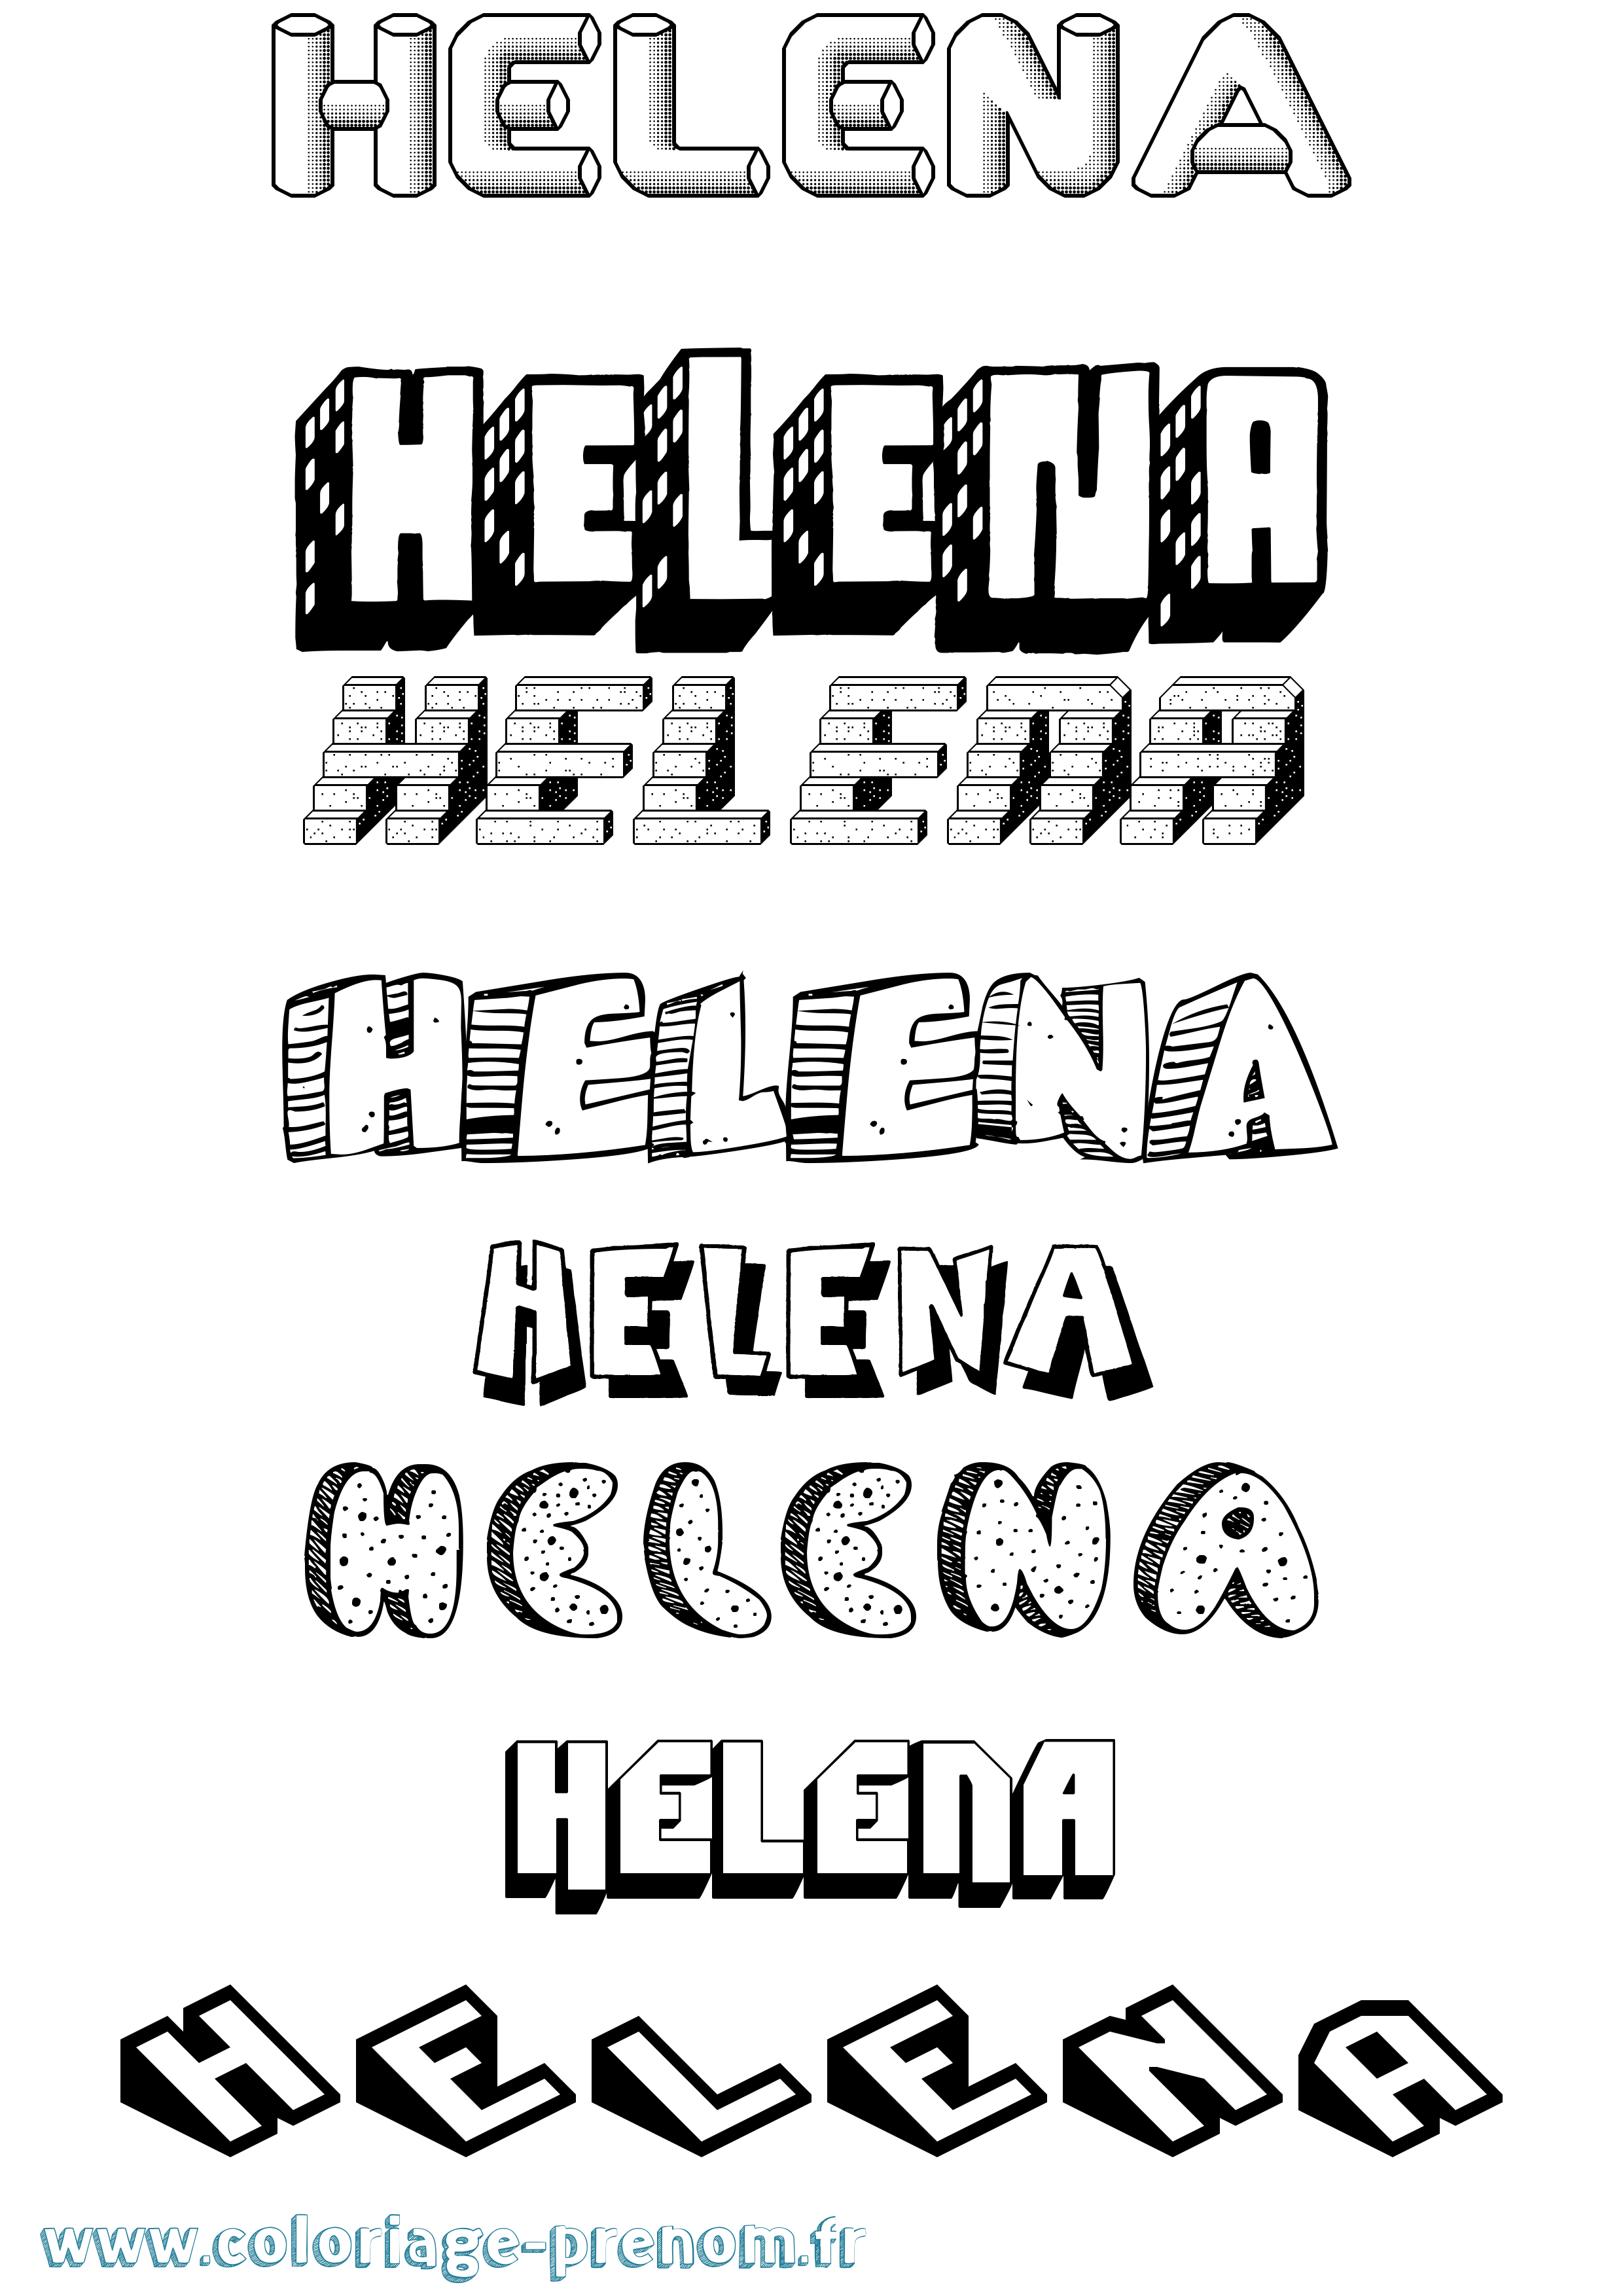 Coloriage prénom Helena